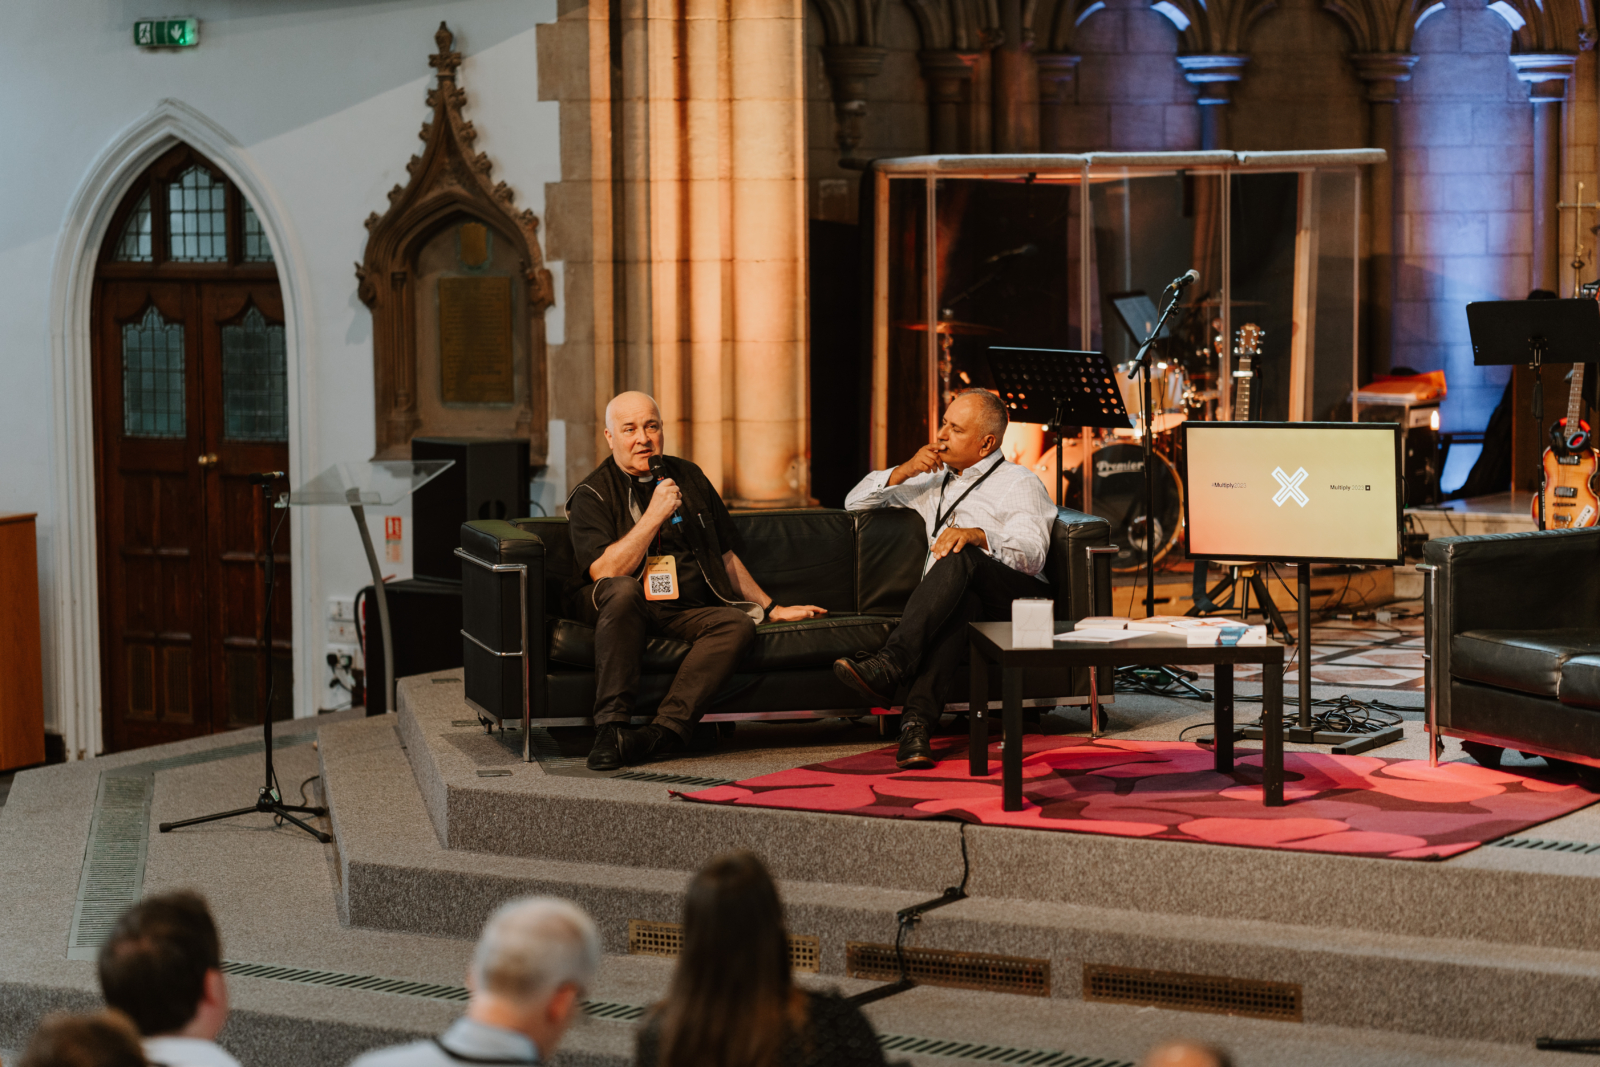 Archbishop of York Stephen Cottrell sits on a black sofa alongside interviewer Christian Selvaratnam